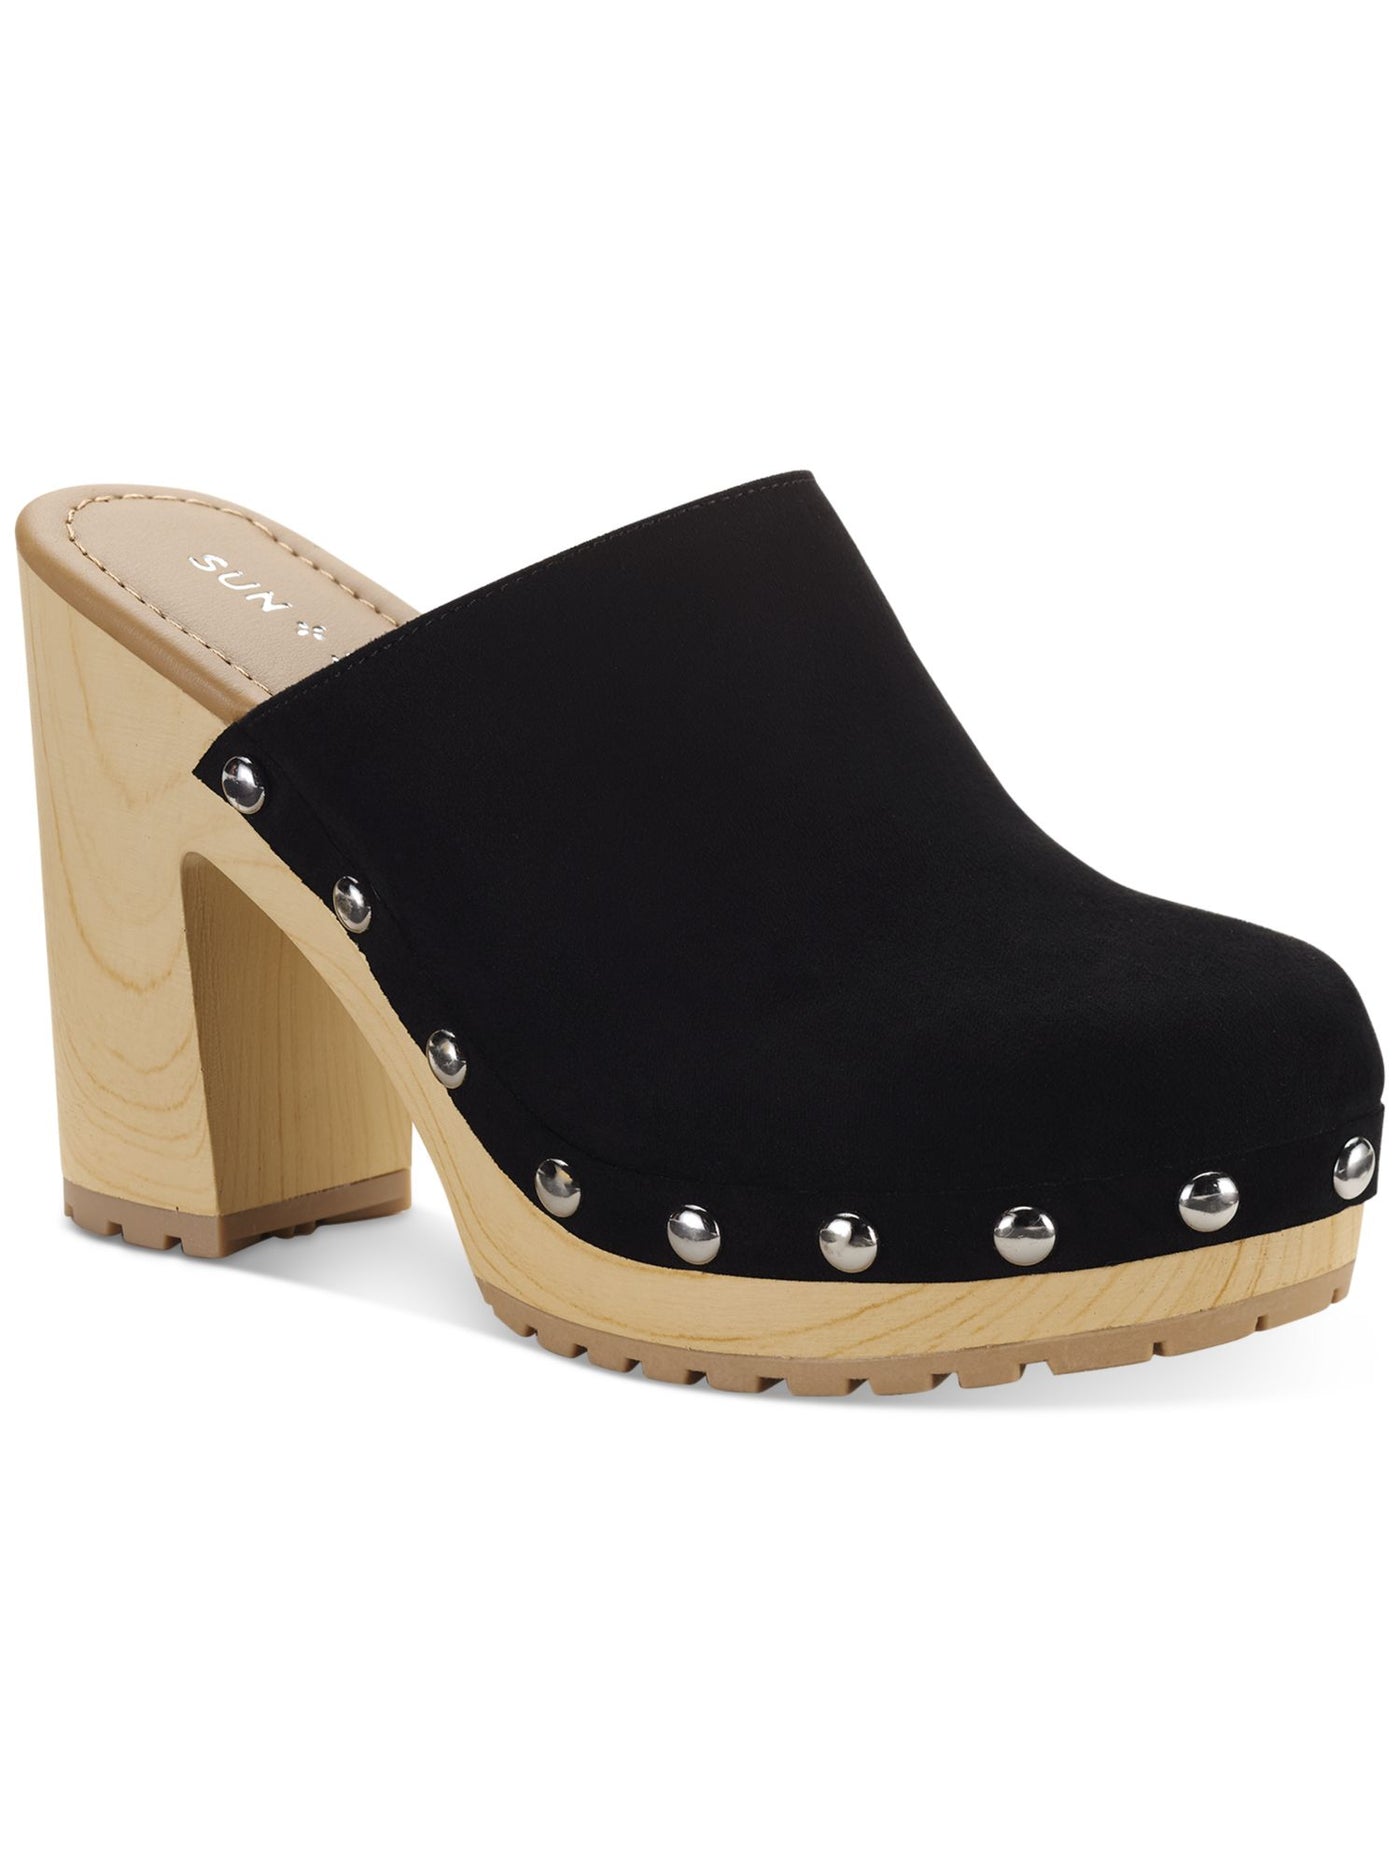 SUN STONE Womens Black 1 Wood-Like Platform Studded Cushioned Taanya Round Toe Block Heel Slip On Clogs Shoes 8.5 M